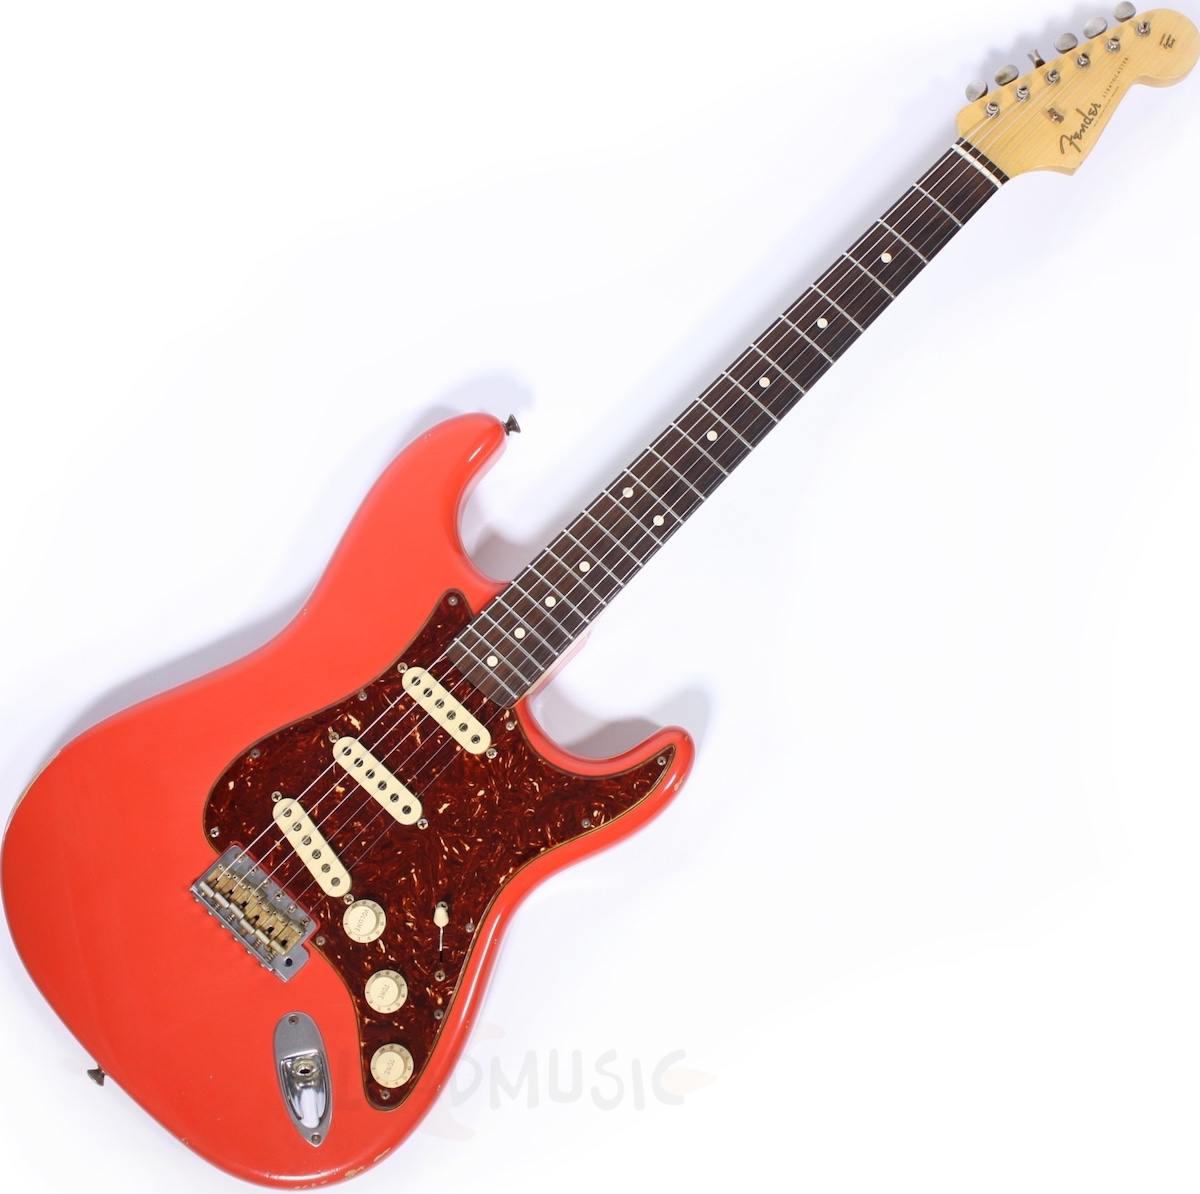 2010 Fender Custom Shop 1962 Limited Fiesta red